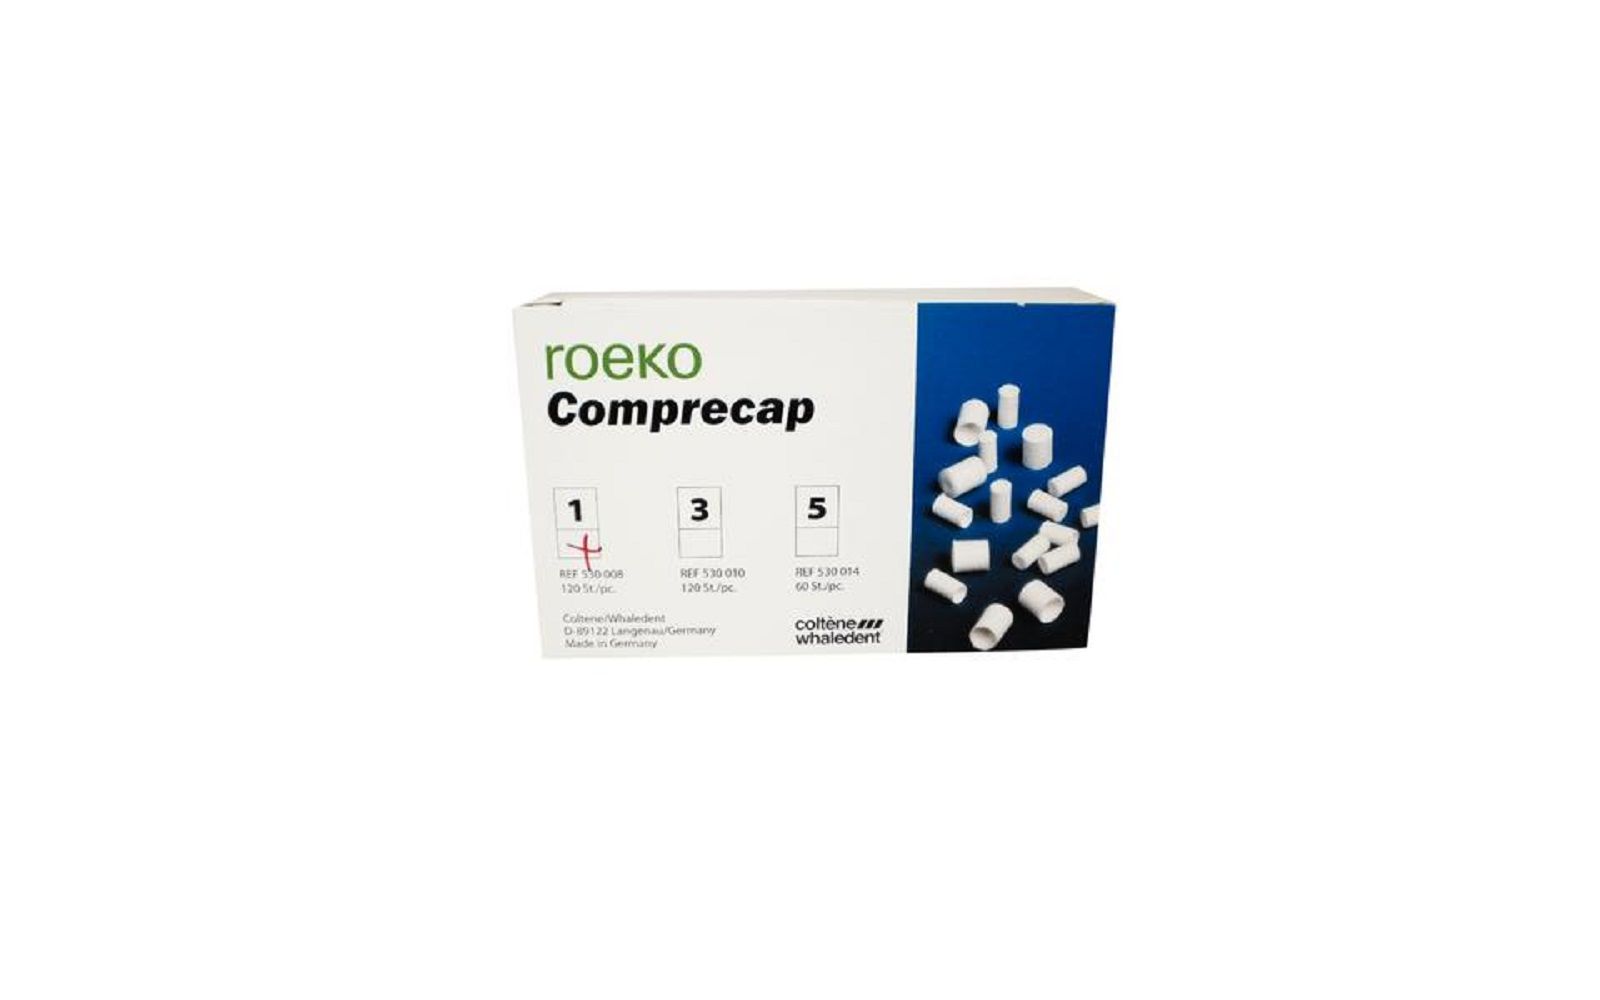 Roeko comprecap compression caps, standard pack - coltene